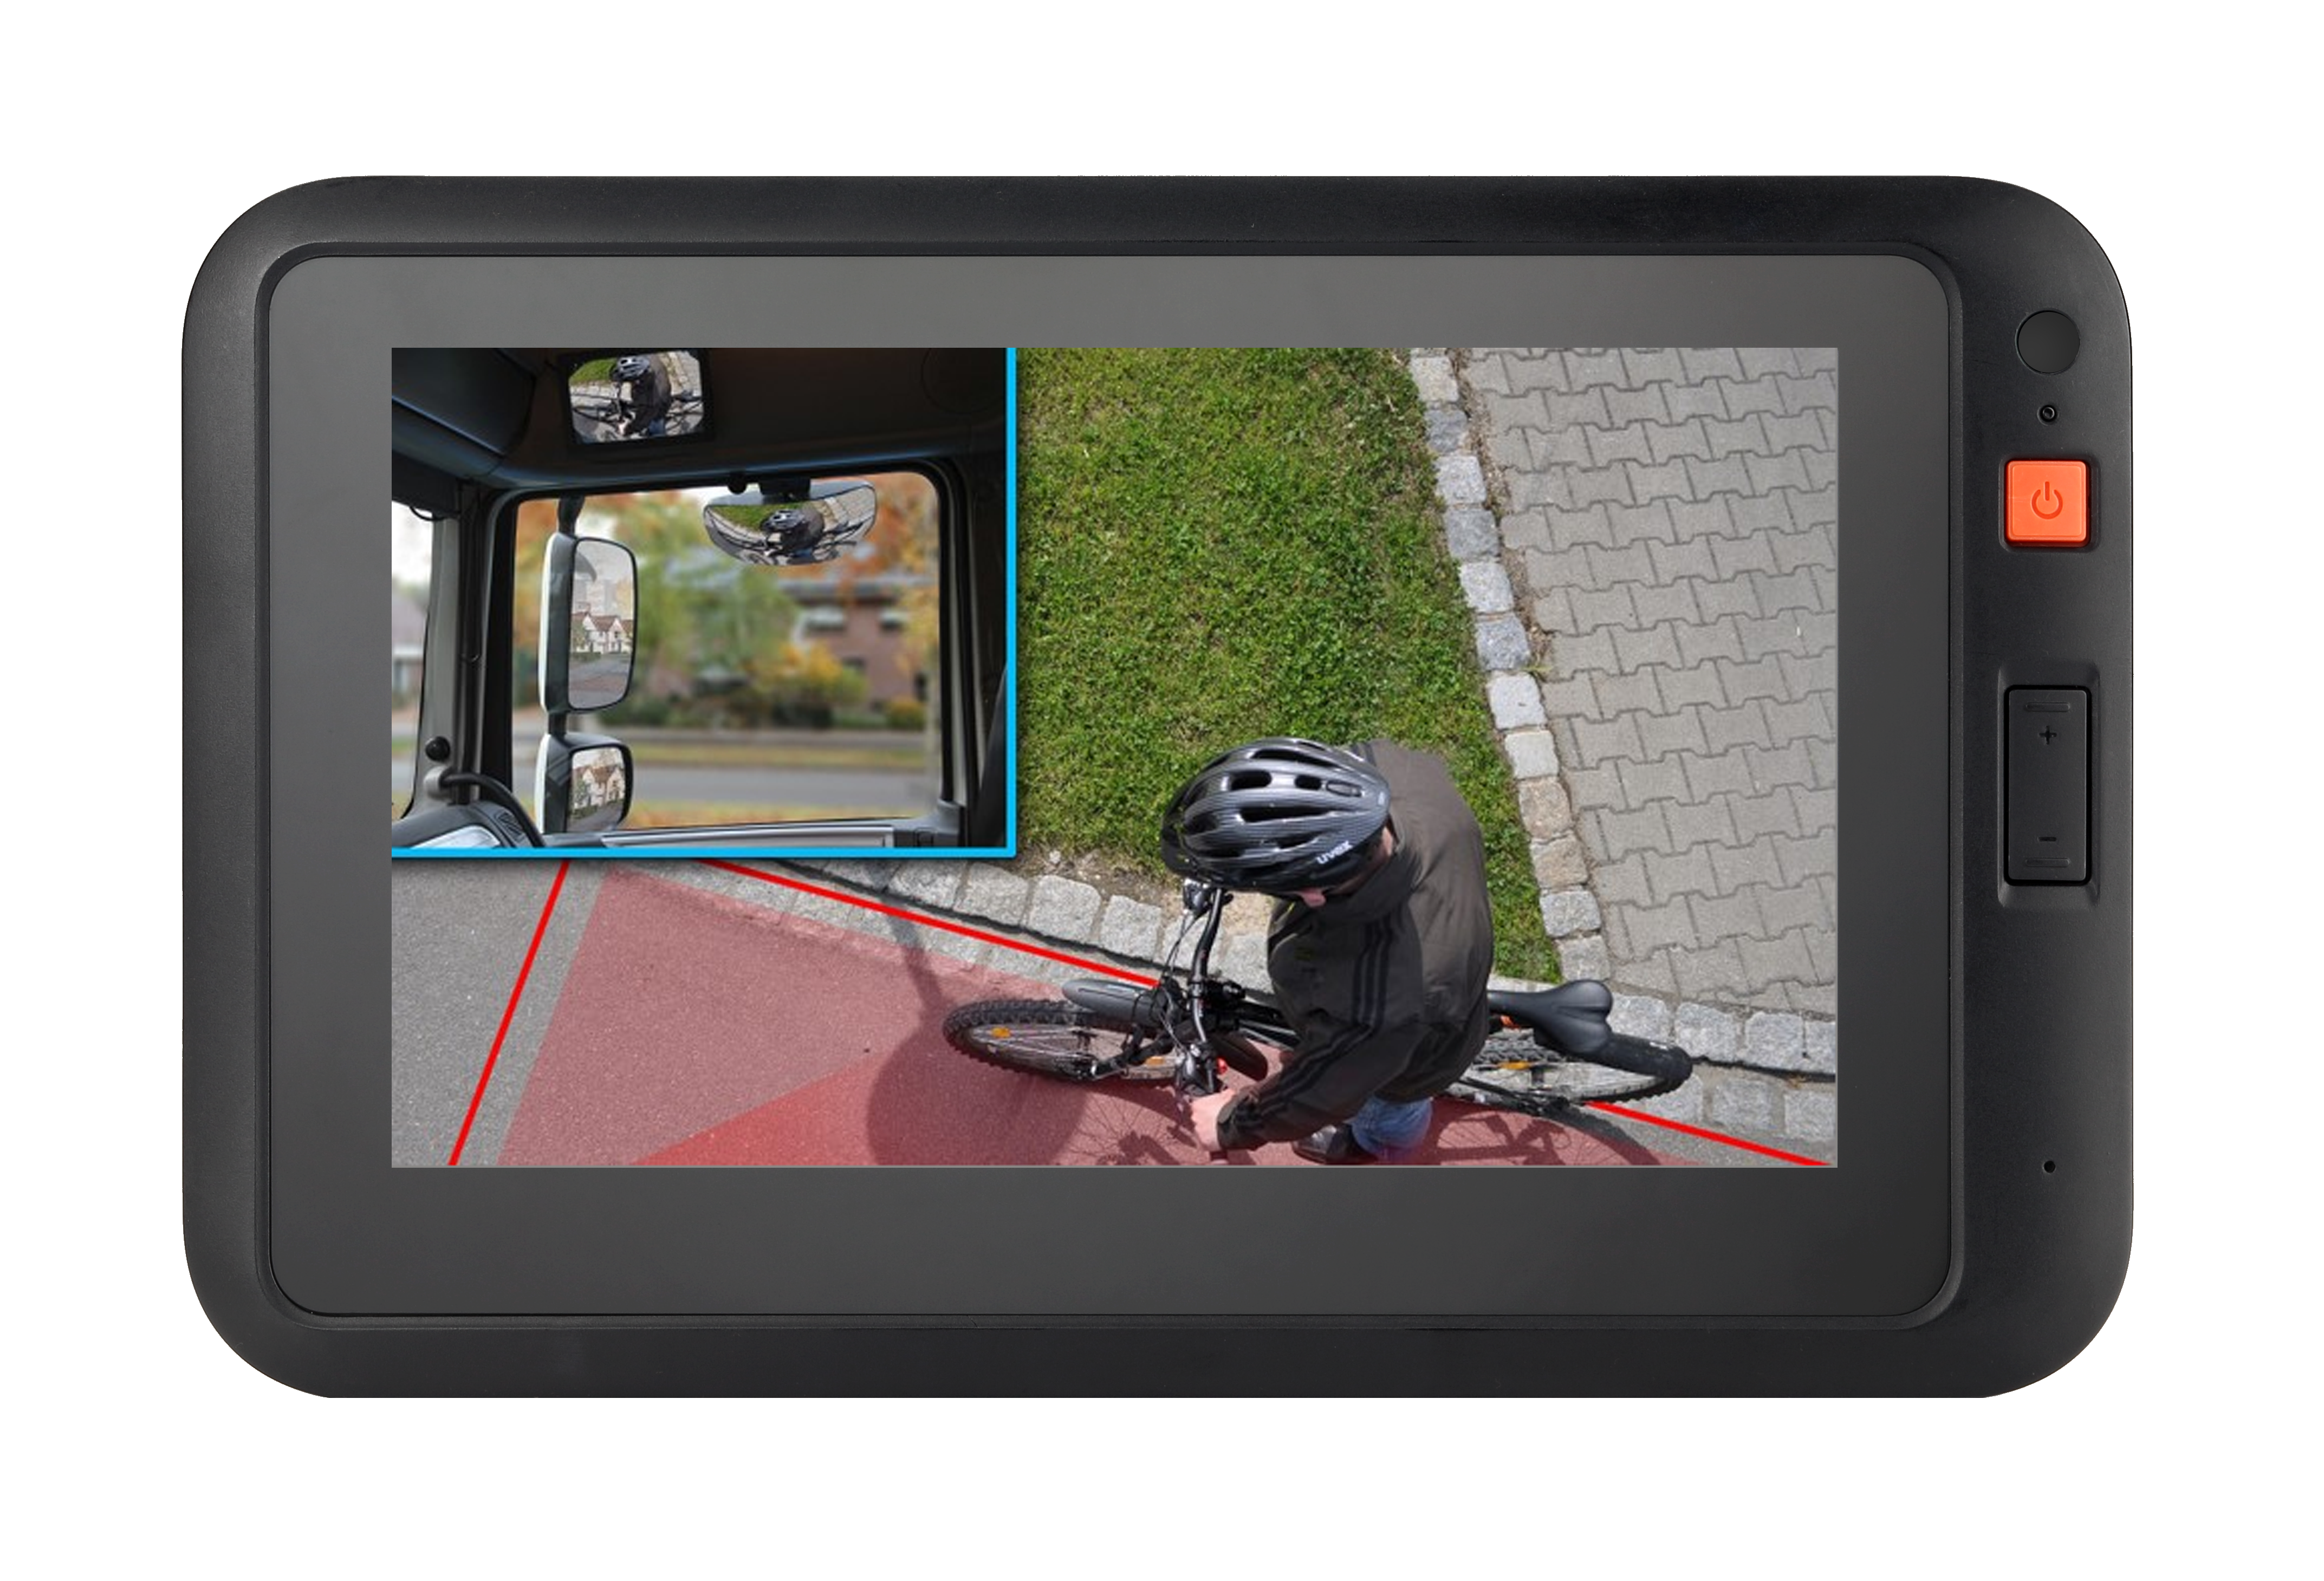  Astrata VideoLinc video surveillance solution cargo damage cyclists pedestrians